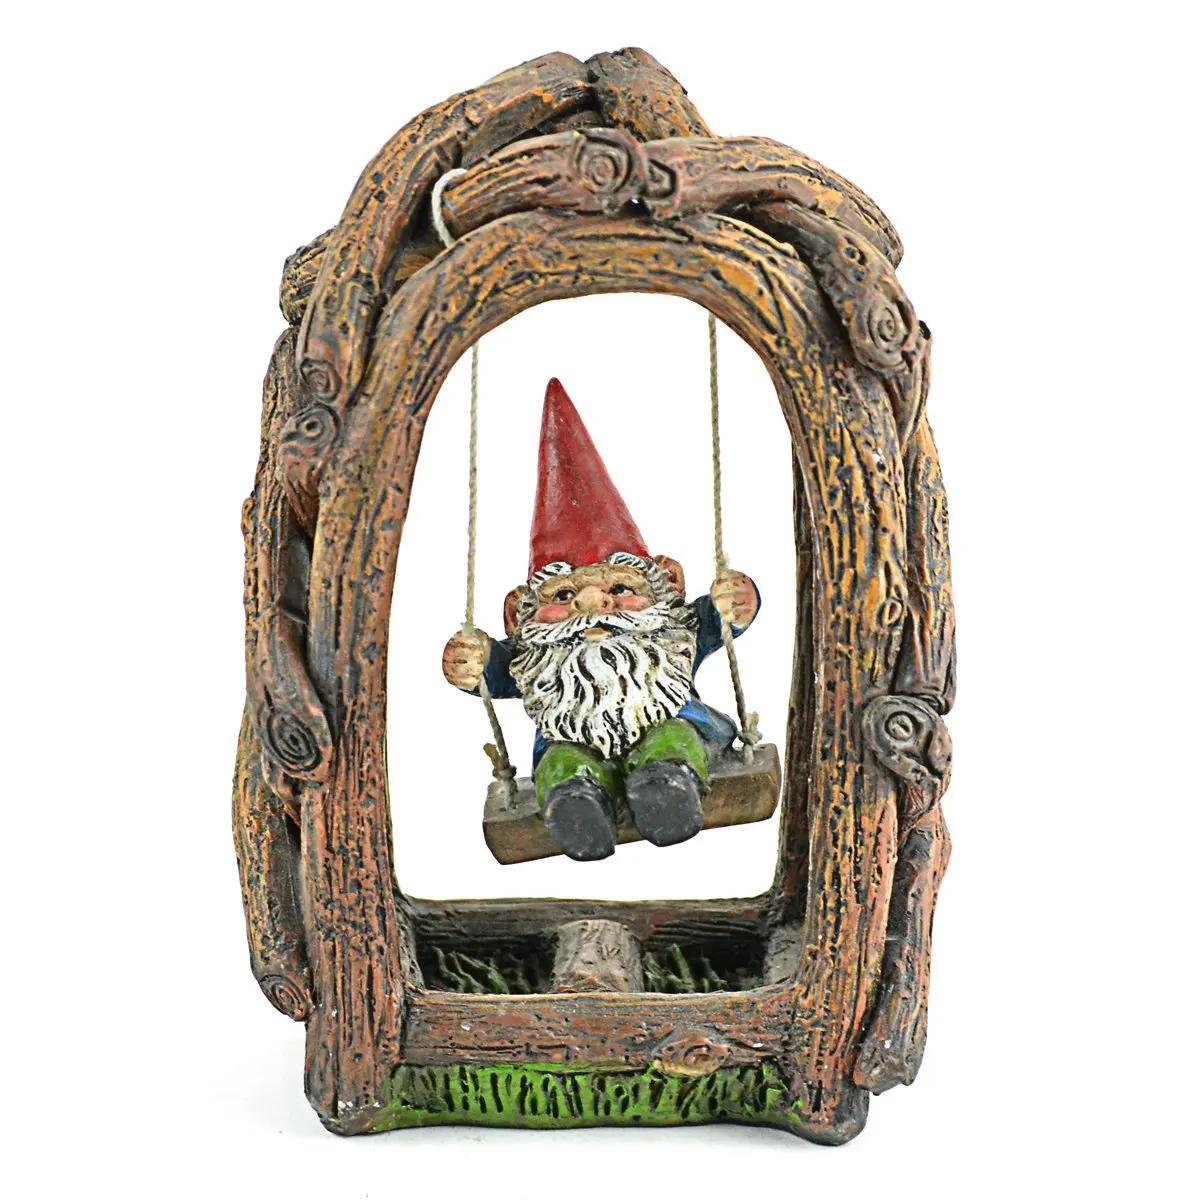 Mini Garden Resin Gnome on Swing, 5 x 3.25 inch. 